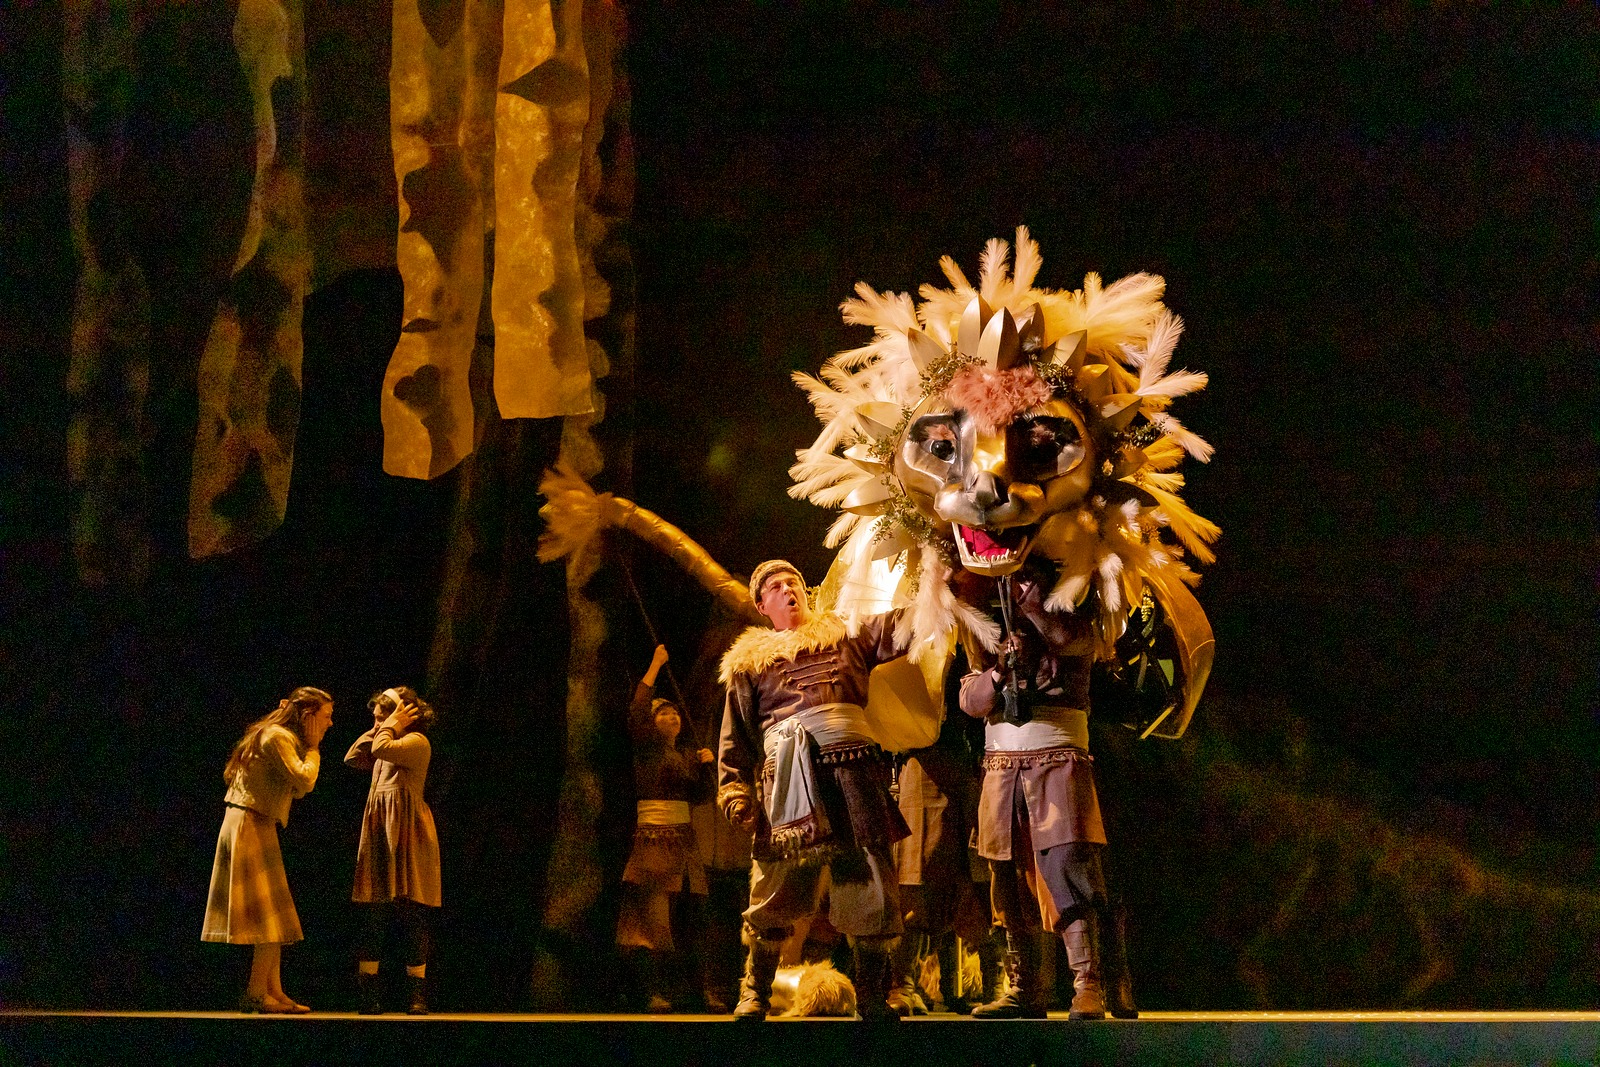 Cast of "Narnia" at The Children's Theatre of Cincinnati.